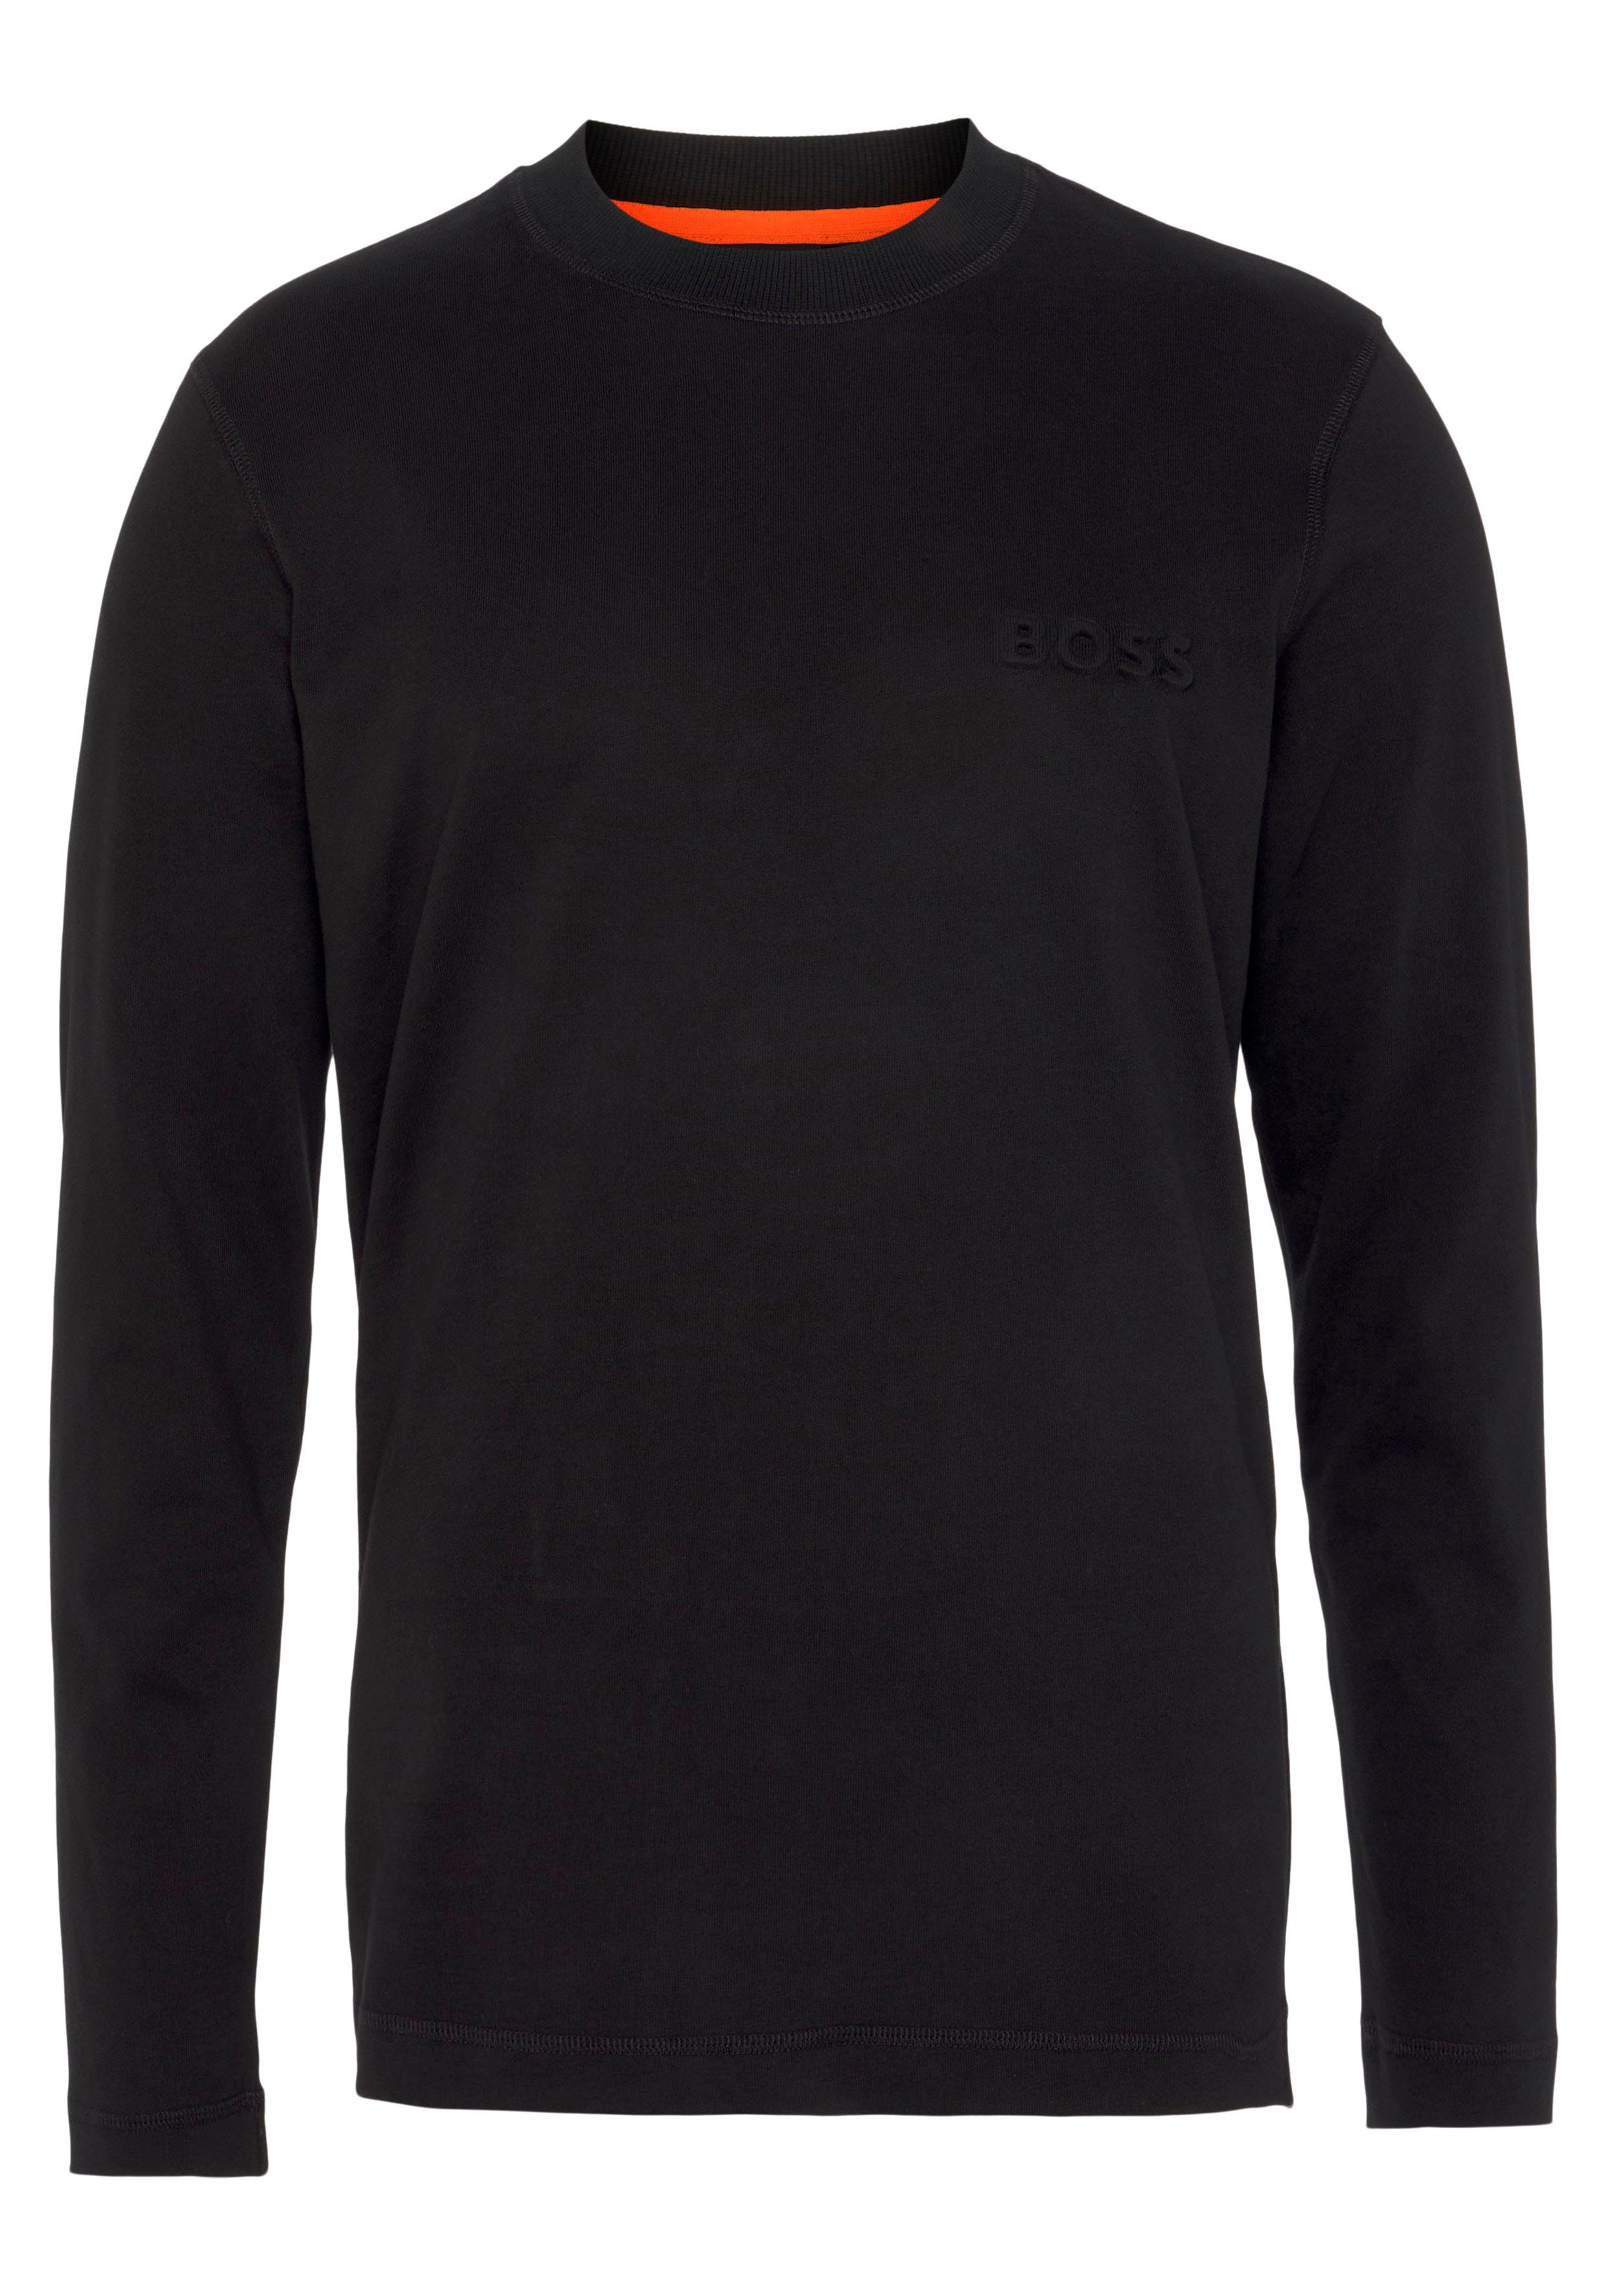 BOSS ORANGE Rundhalsausschnitt T-Shirt Black mit Teebasiclong